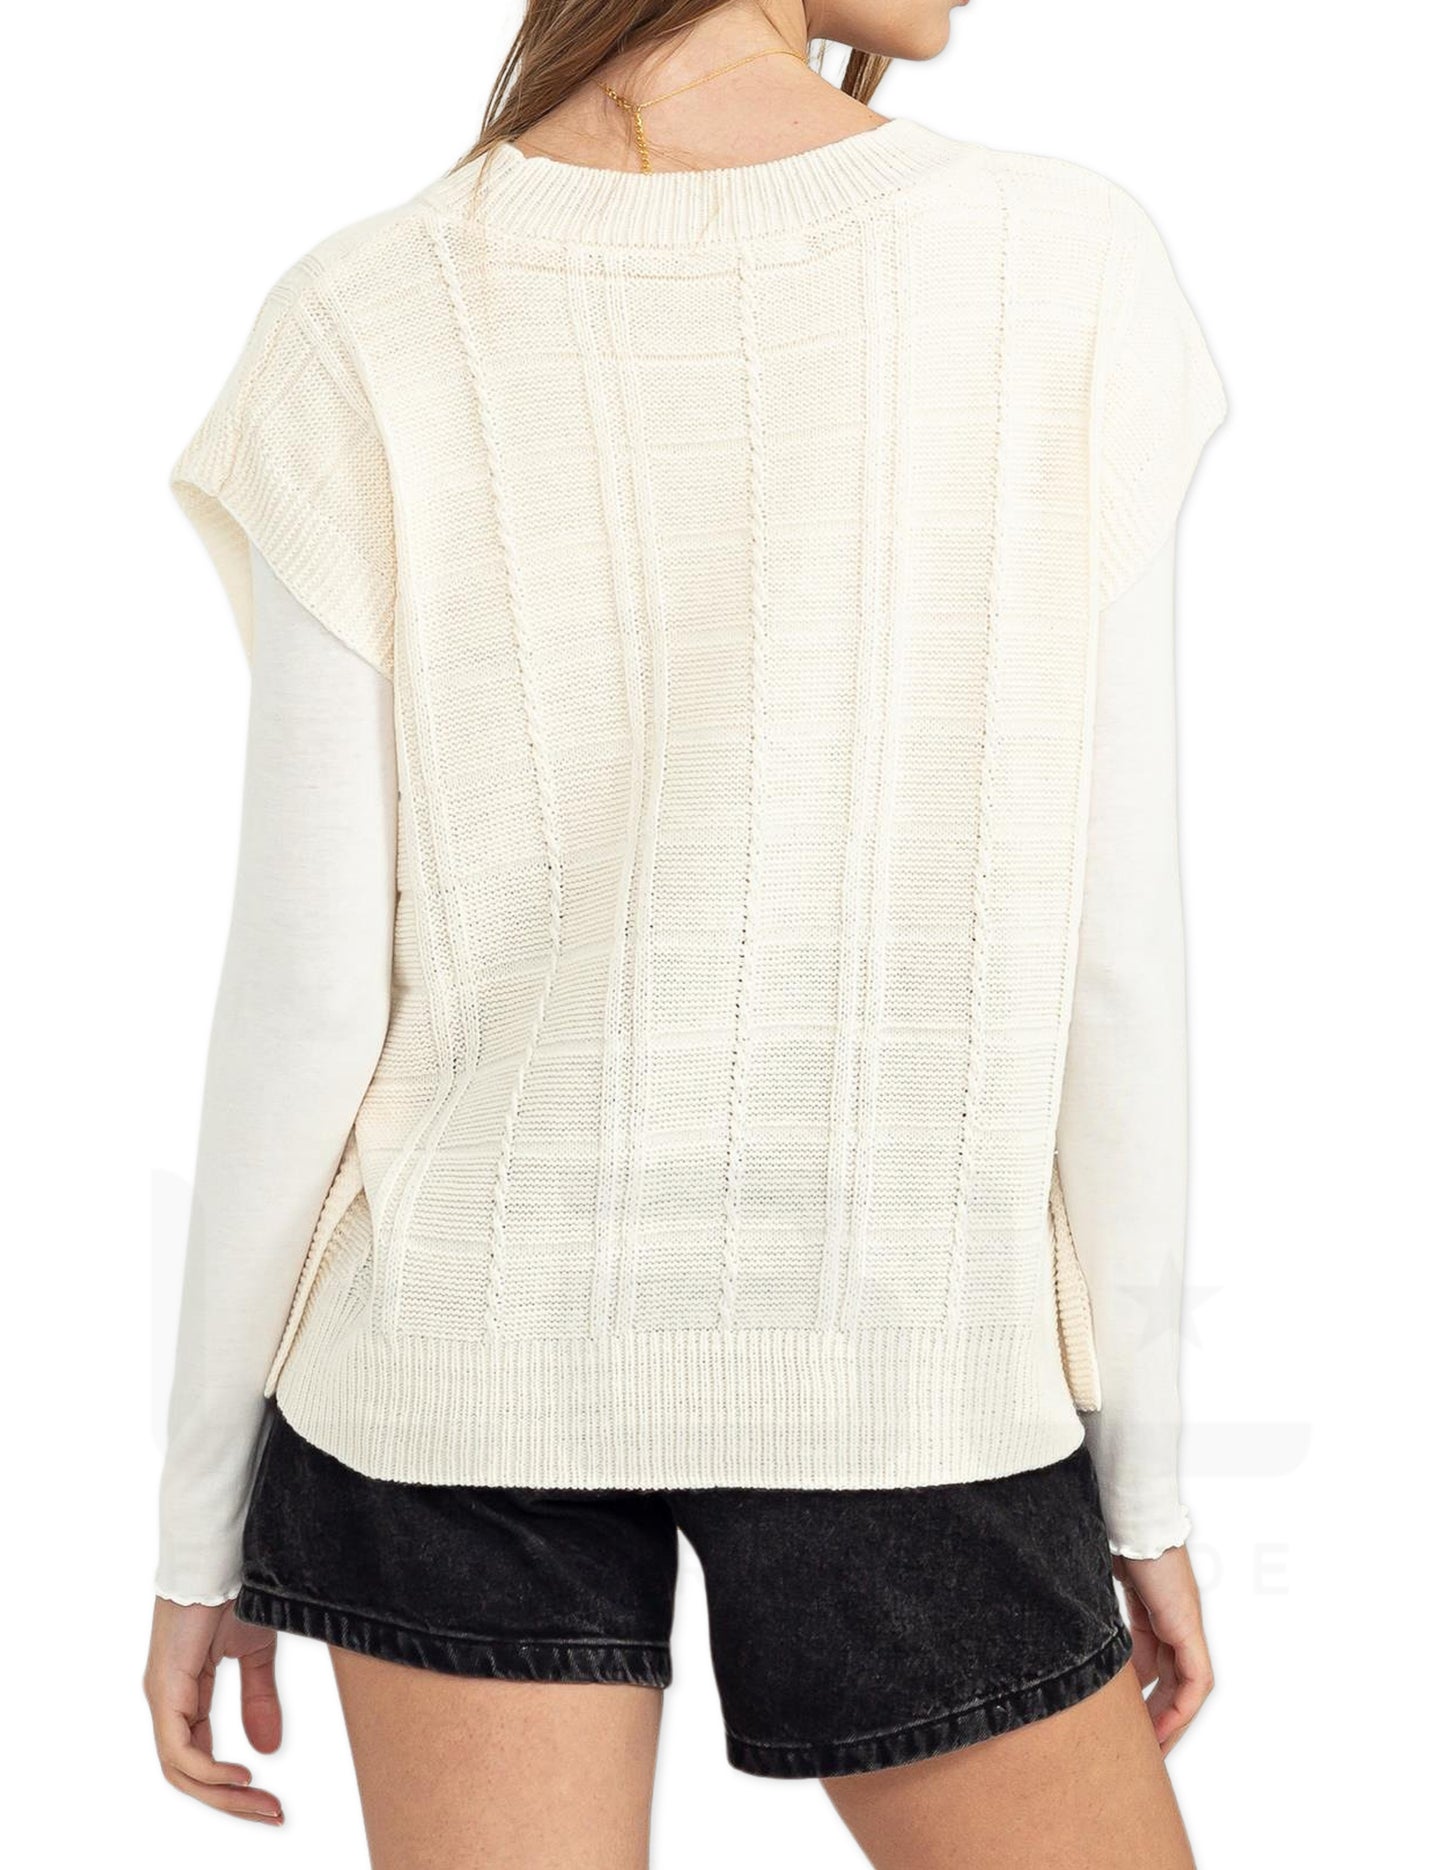 Sleeveless Oversized Cable Knit Sweater Vest - Cream